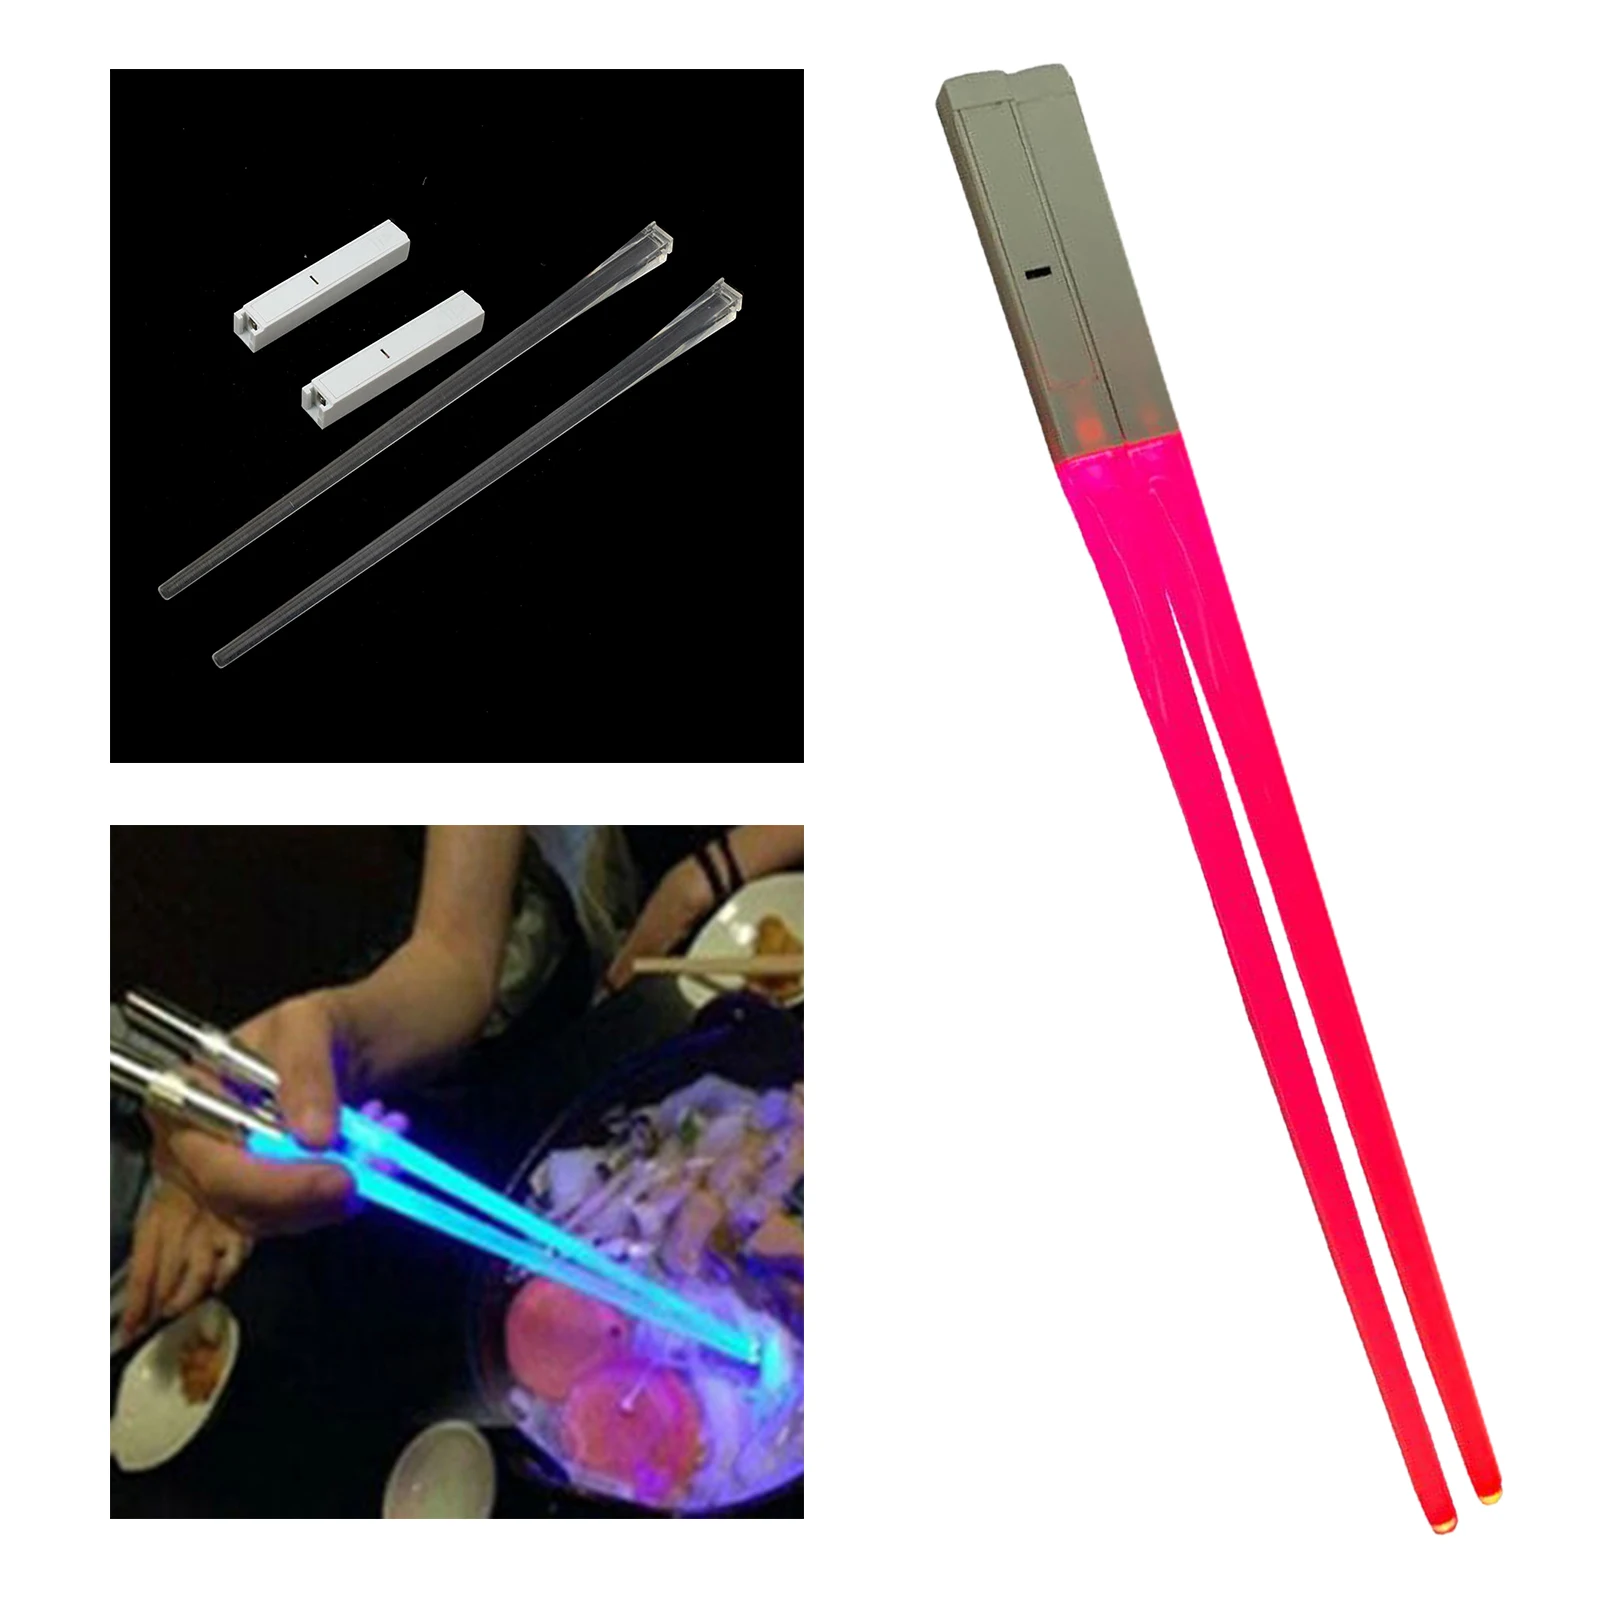 1 Pair of Light Up LED Lightsaber Chopsticks Durable Lightweight Portable BPA Free and Food Safe